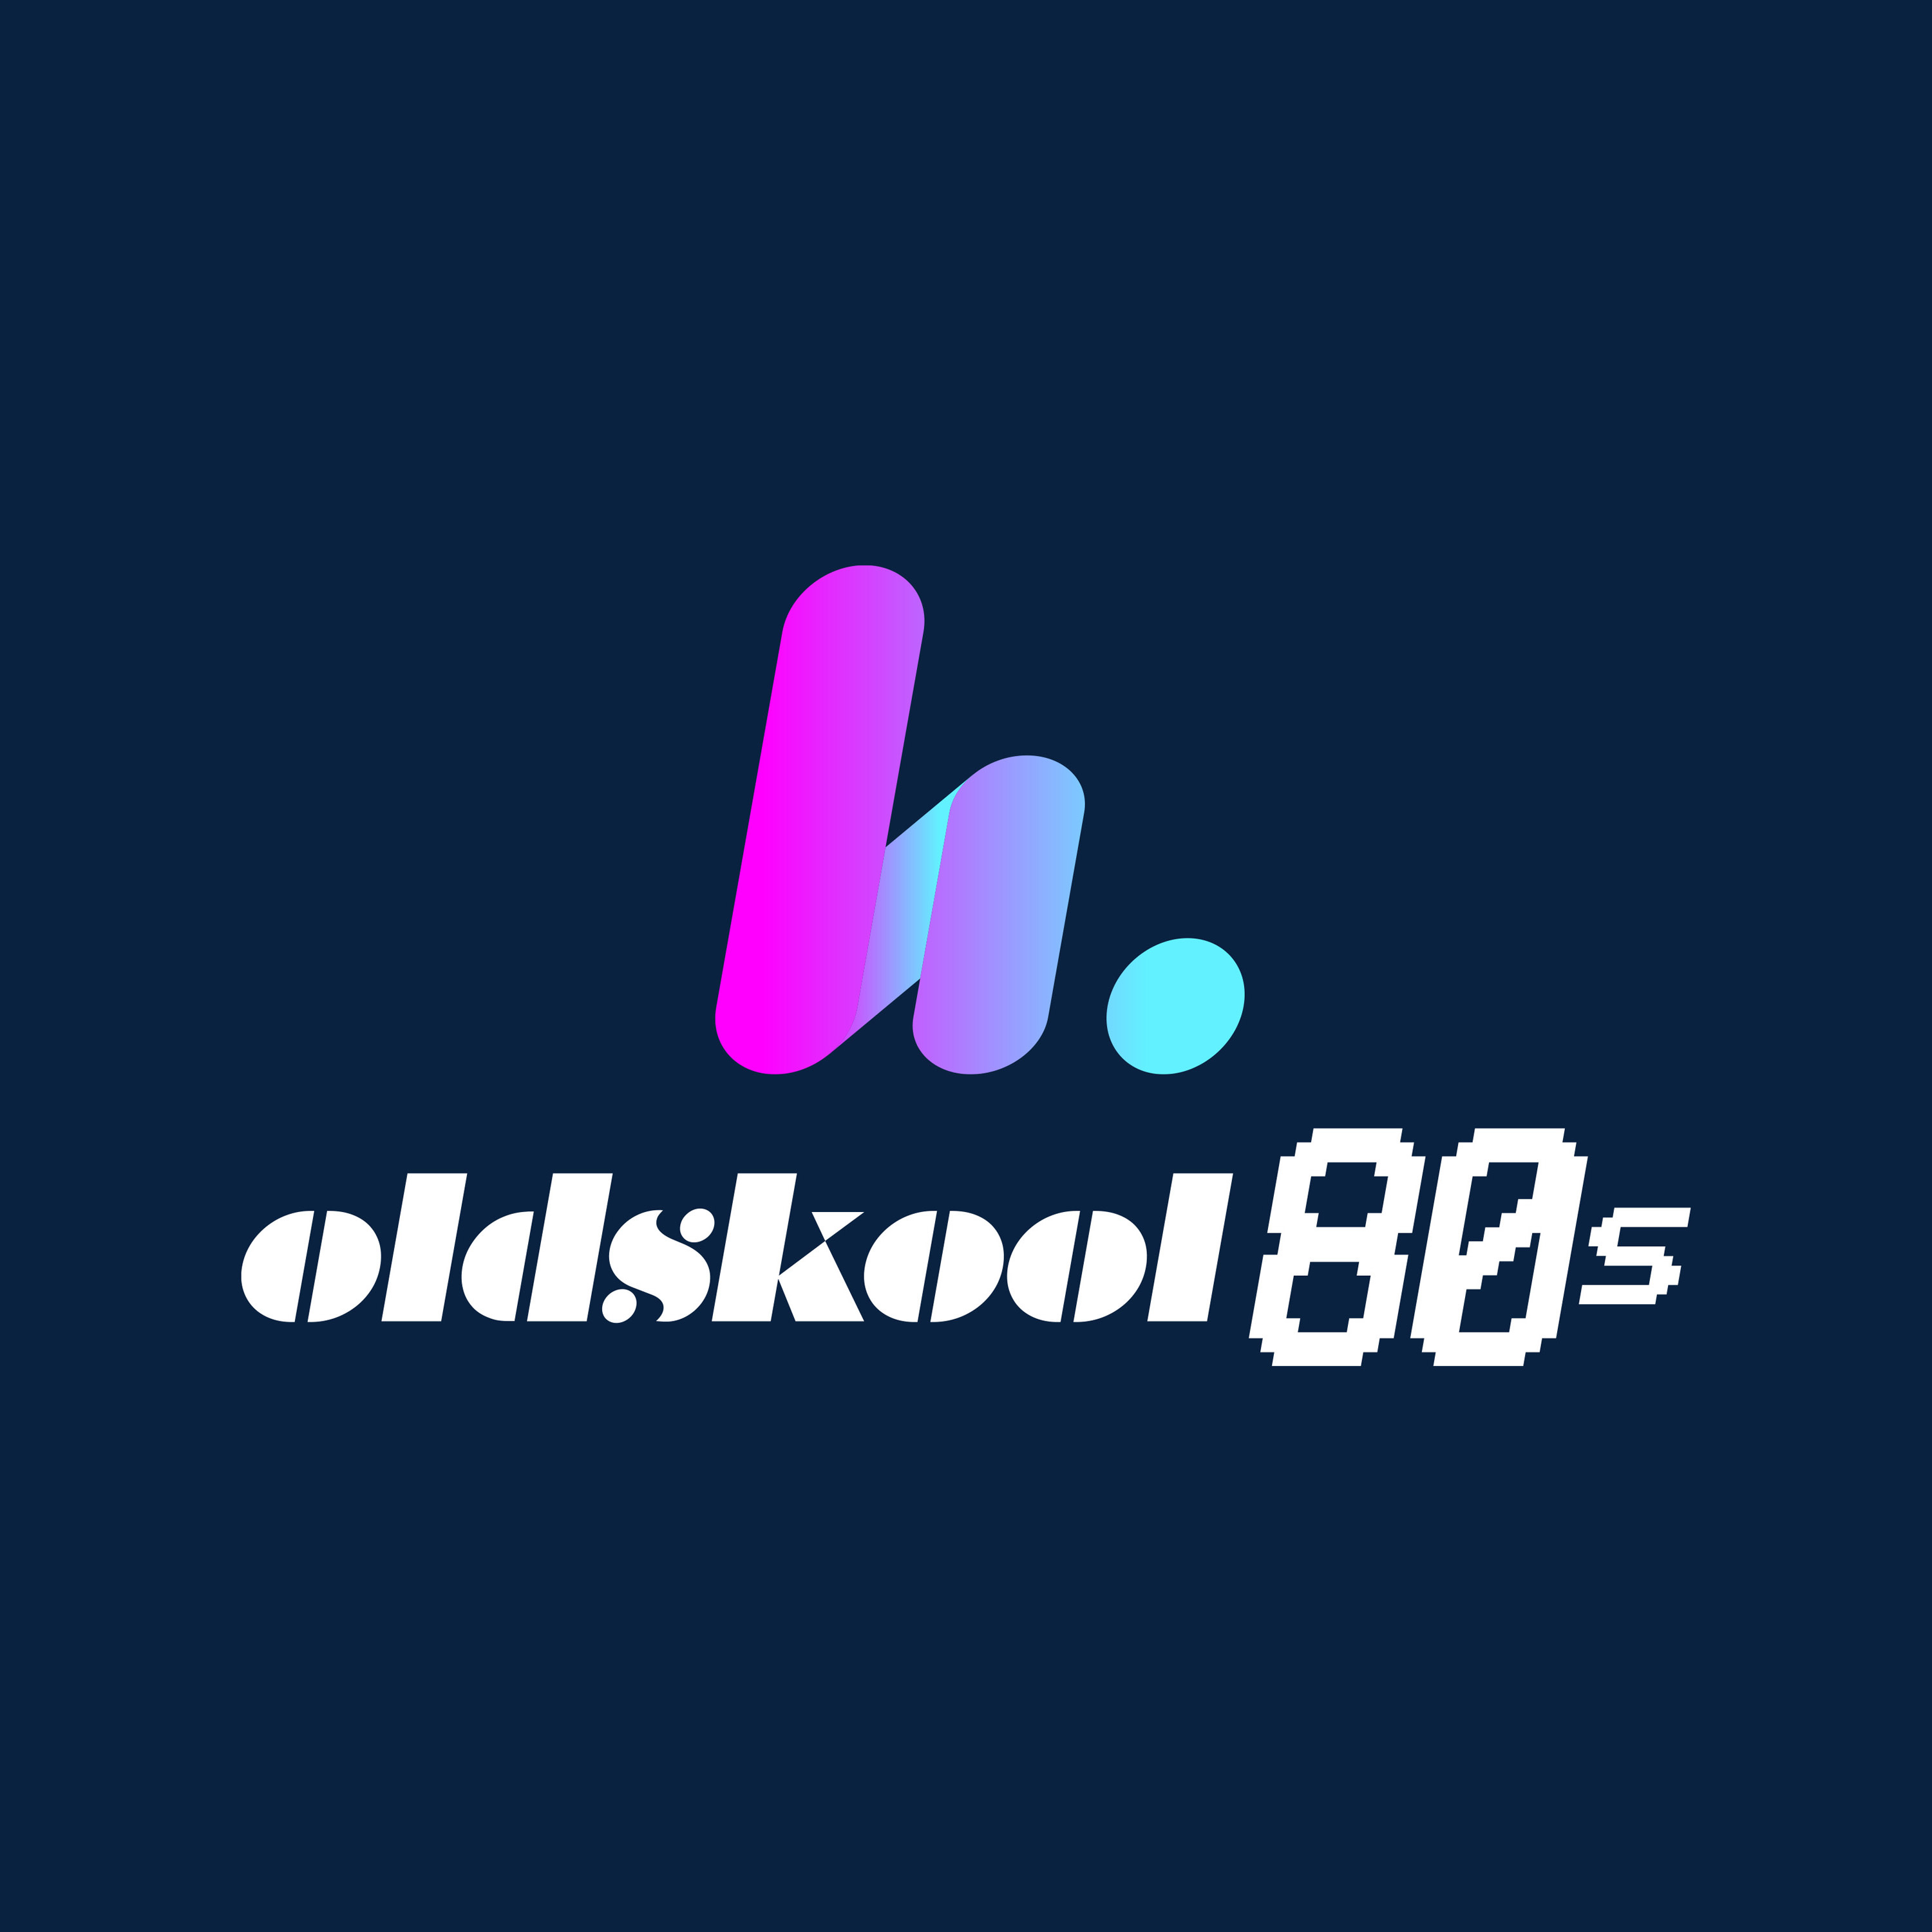 Oldskool 80s Hits logo